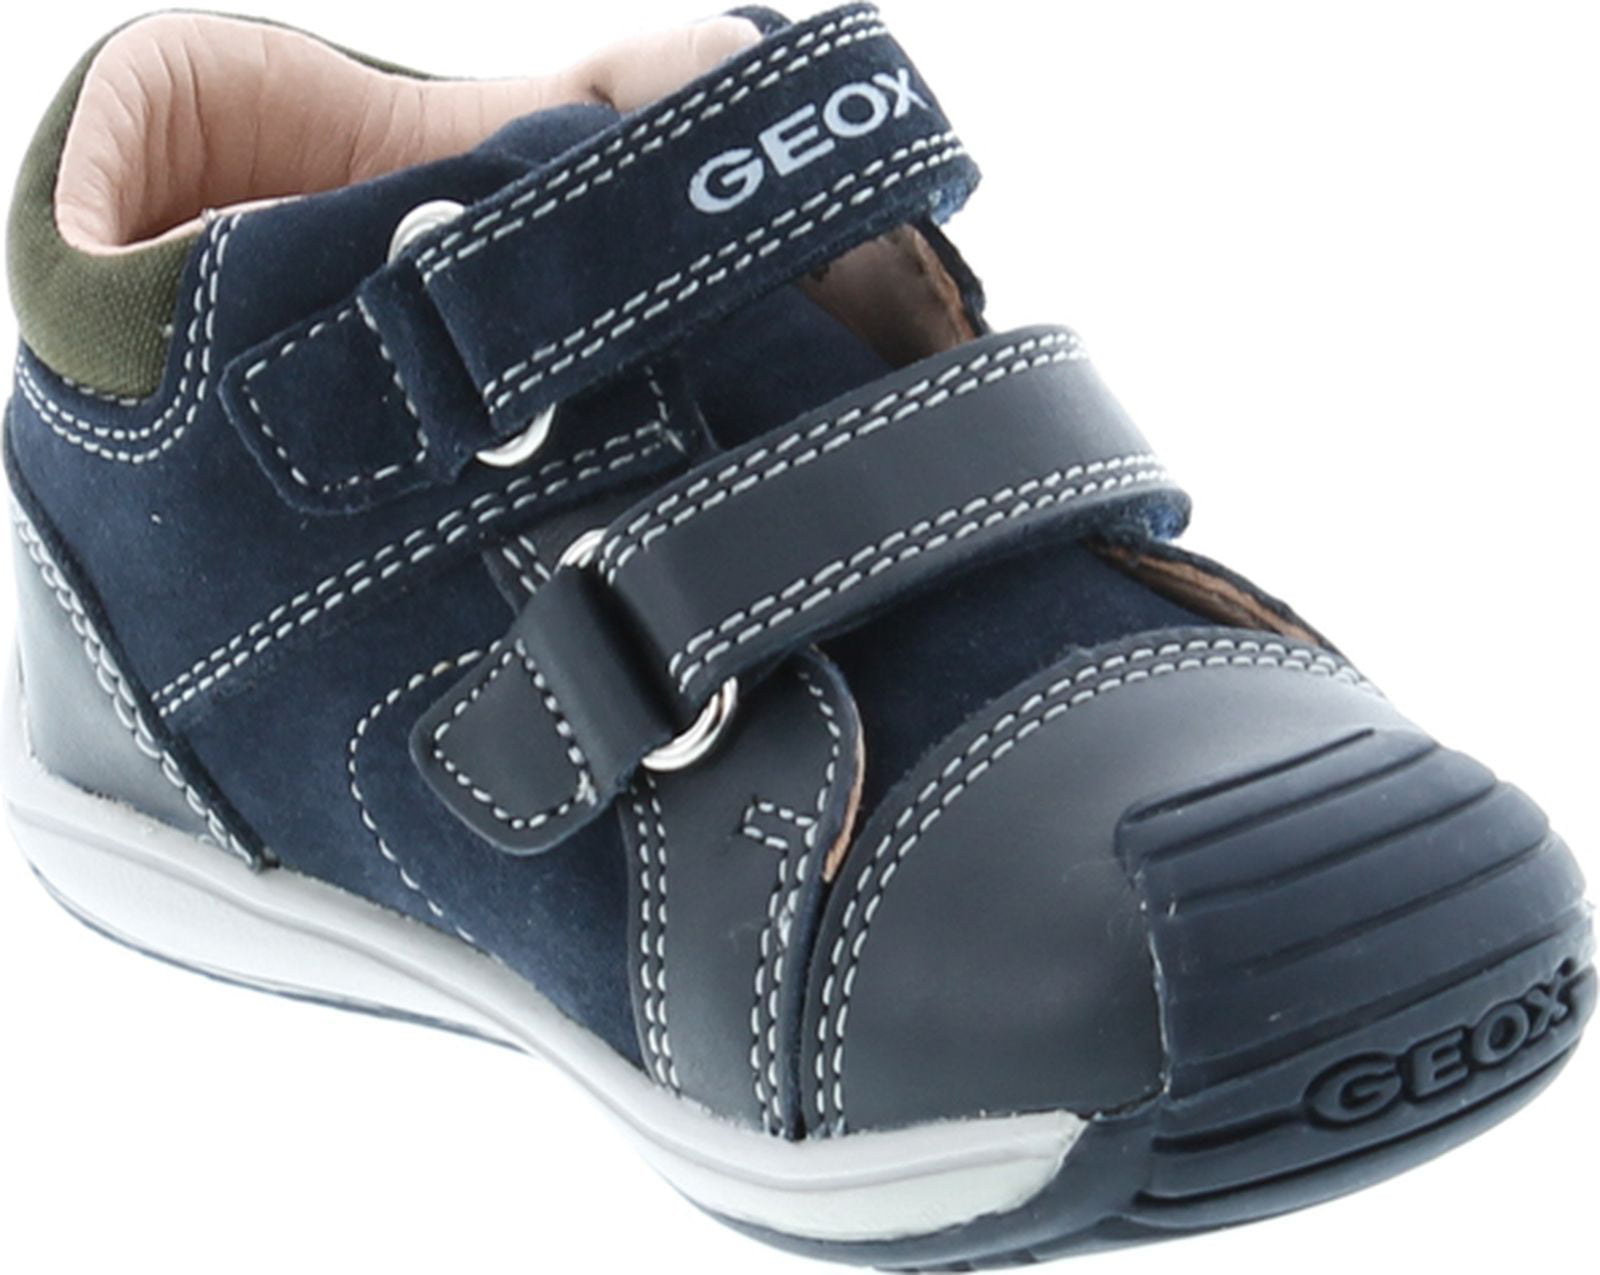 Geox Baby Boys Toledo Fashion Shoes, Navy/Military, 24 -